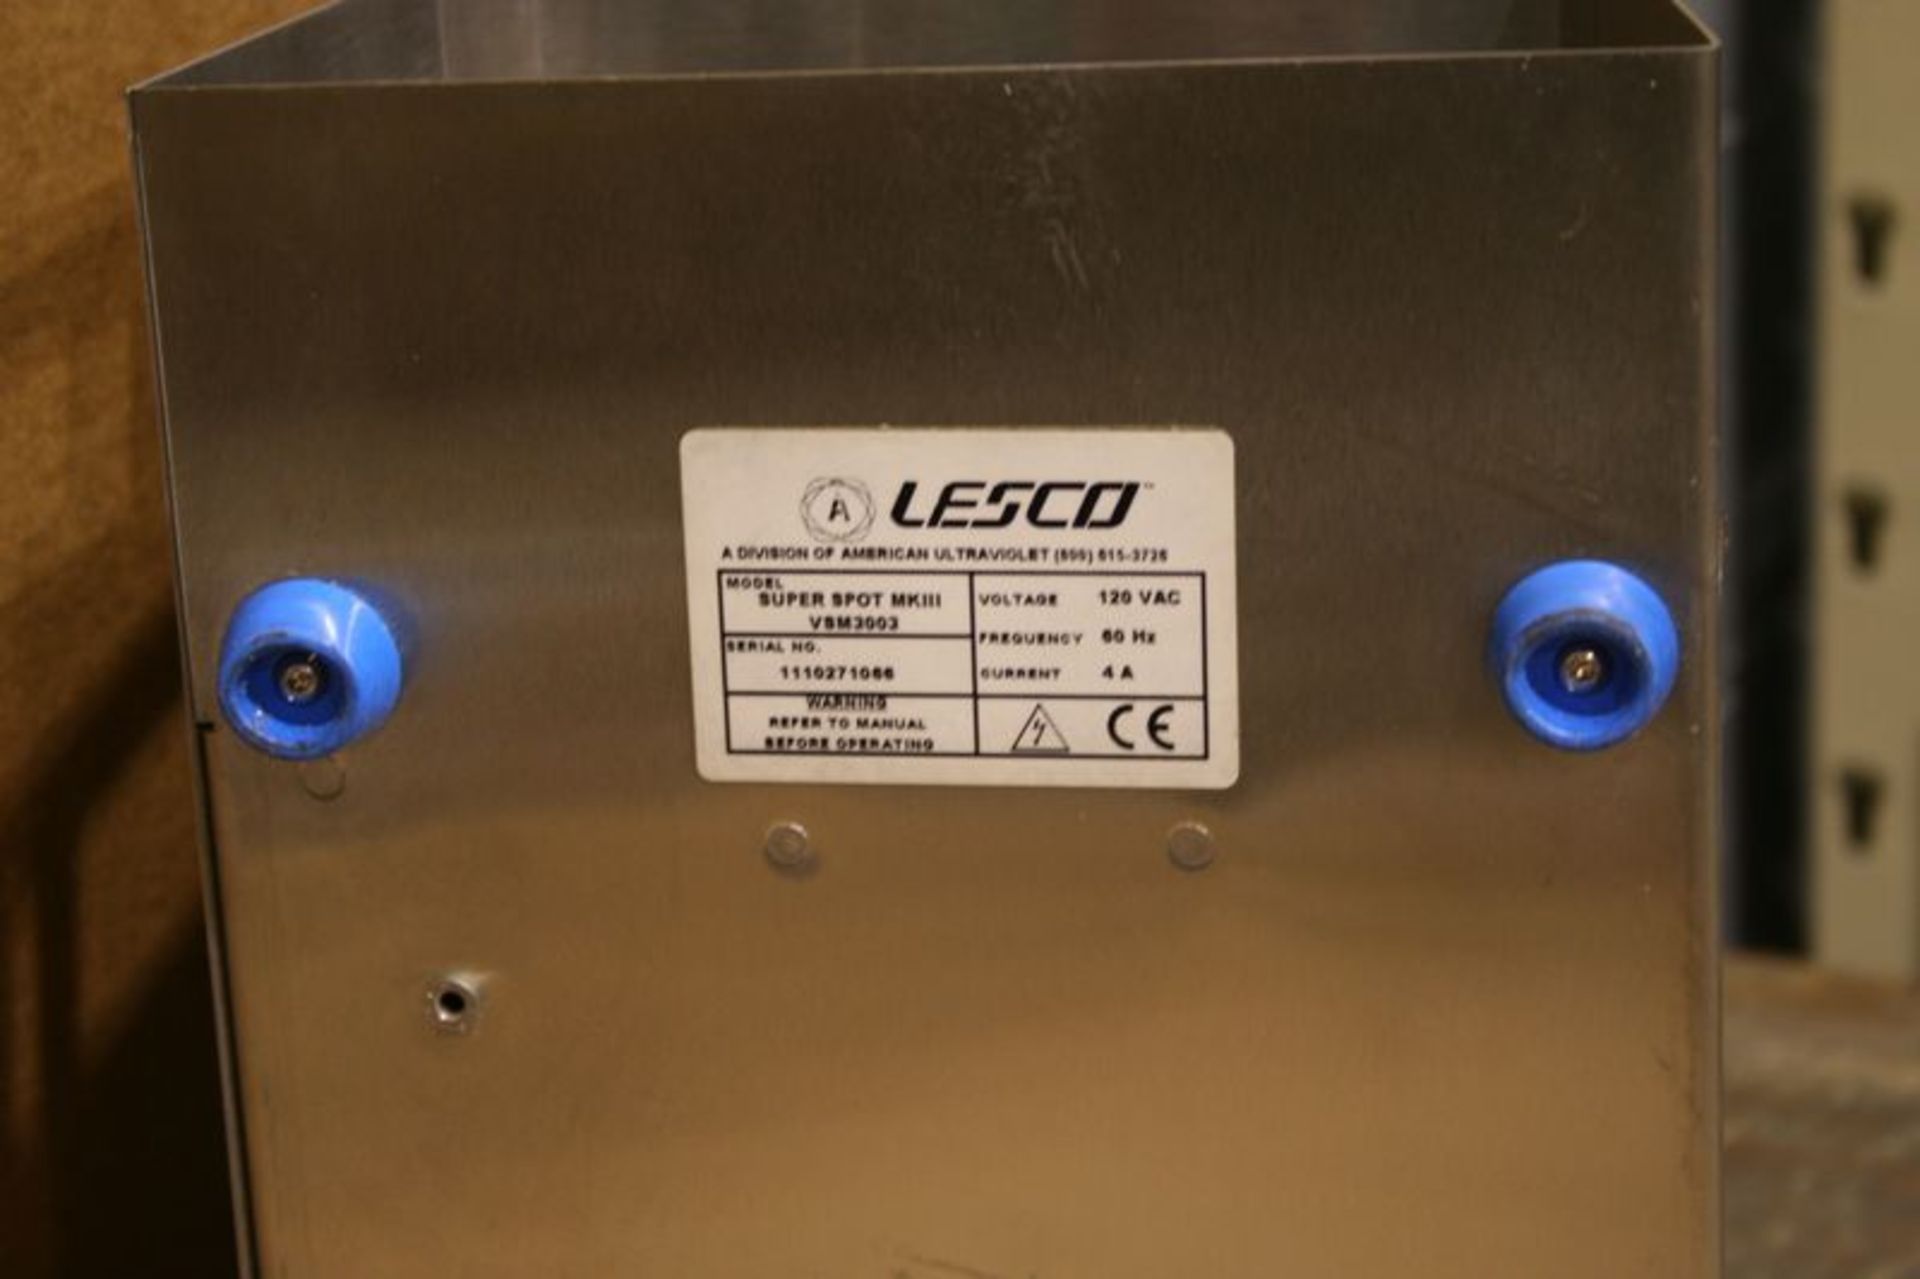 Lesco Super Spot MK II Light Source Mdl VSM2001 - Image 2 of 2